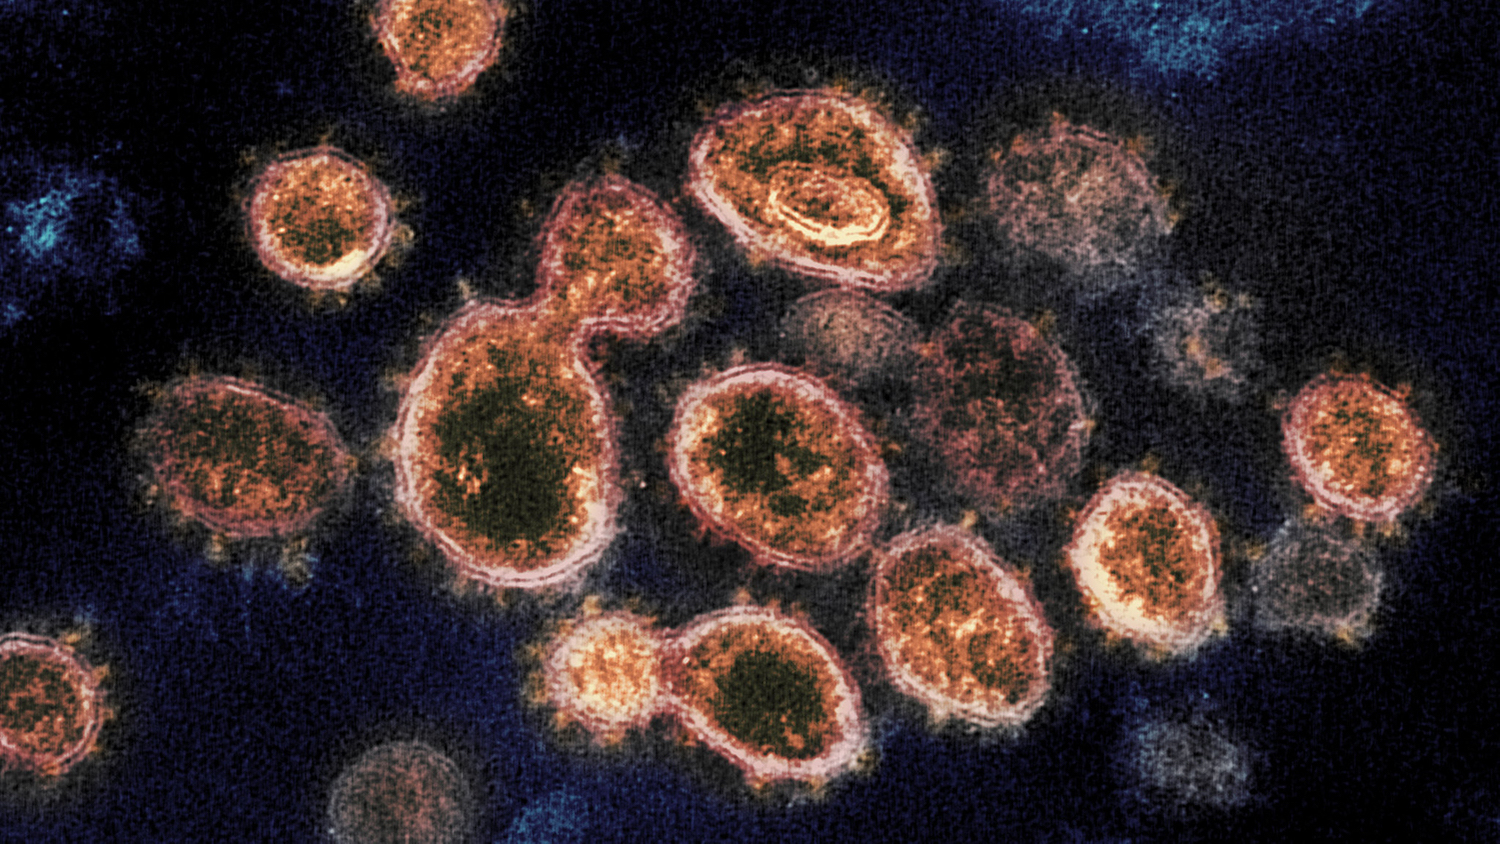 Electron microscope image of the SARS-CoV-2 virus.